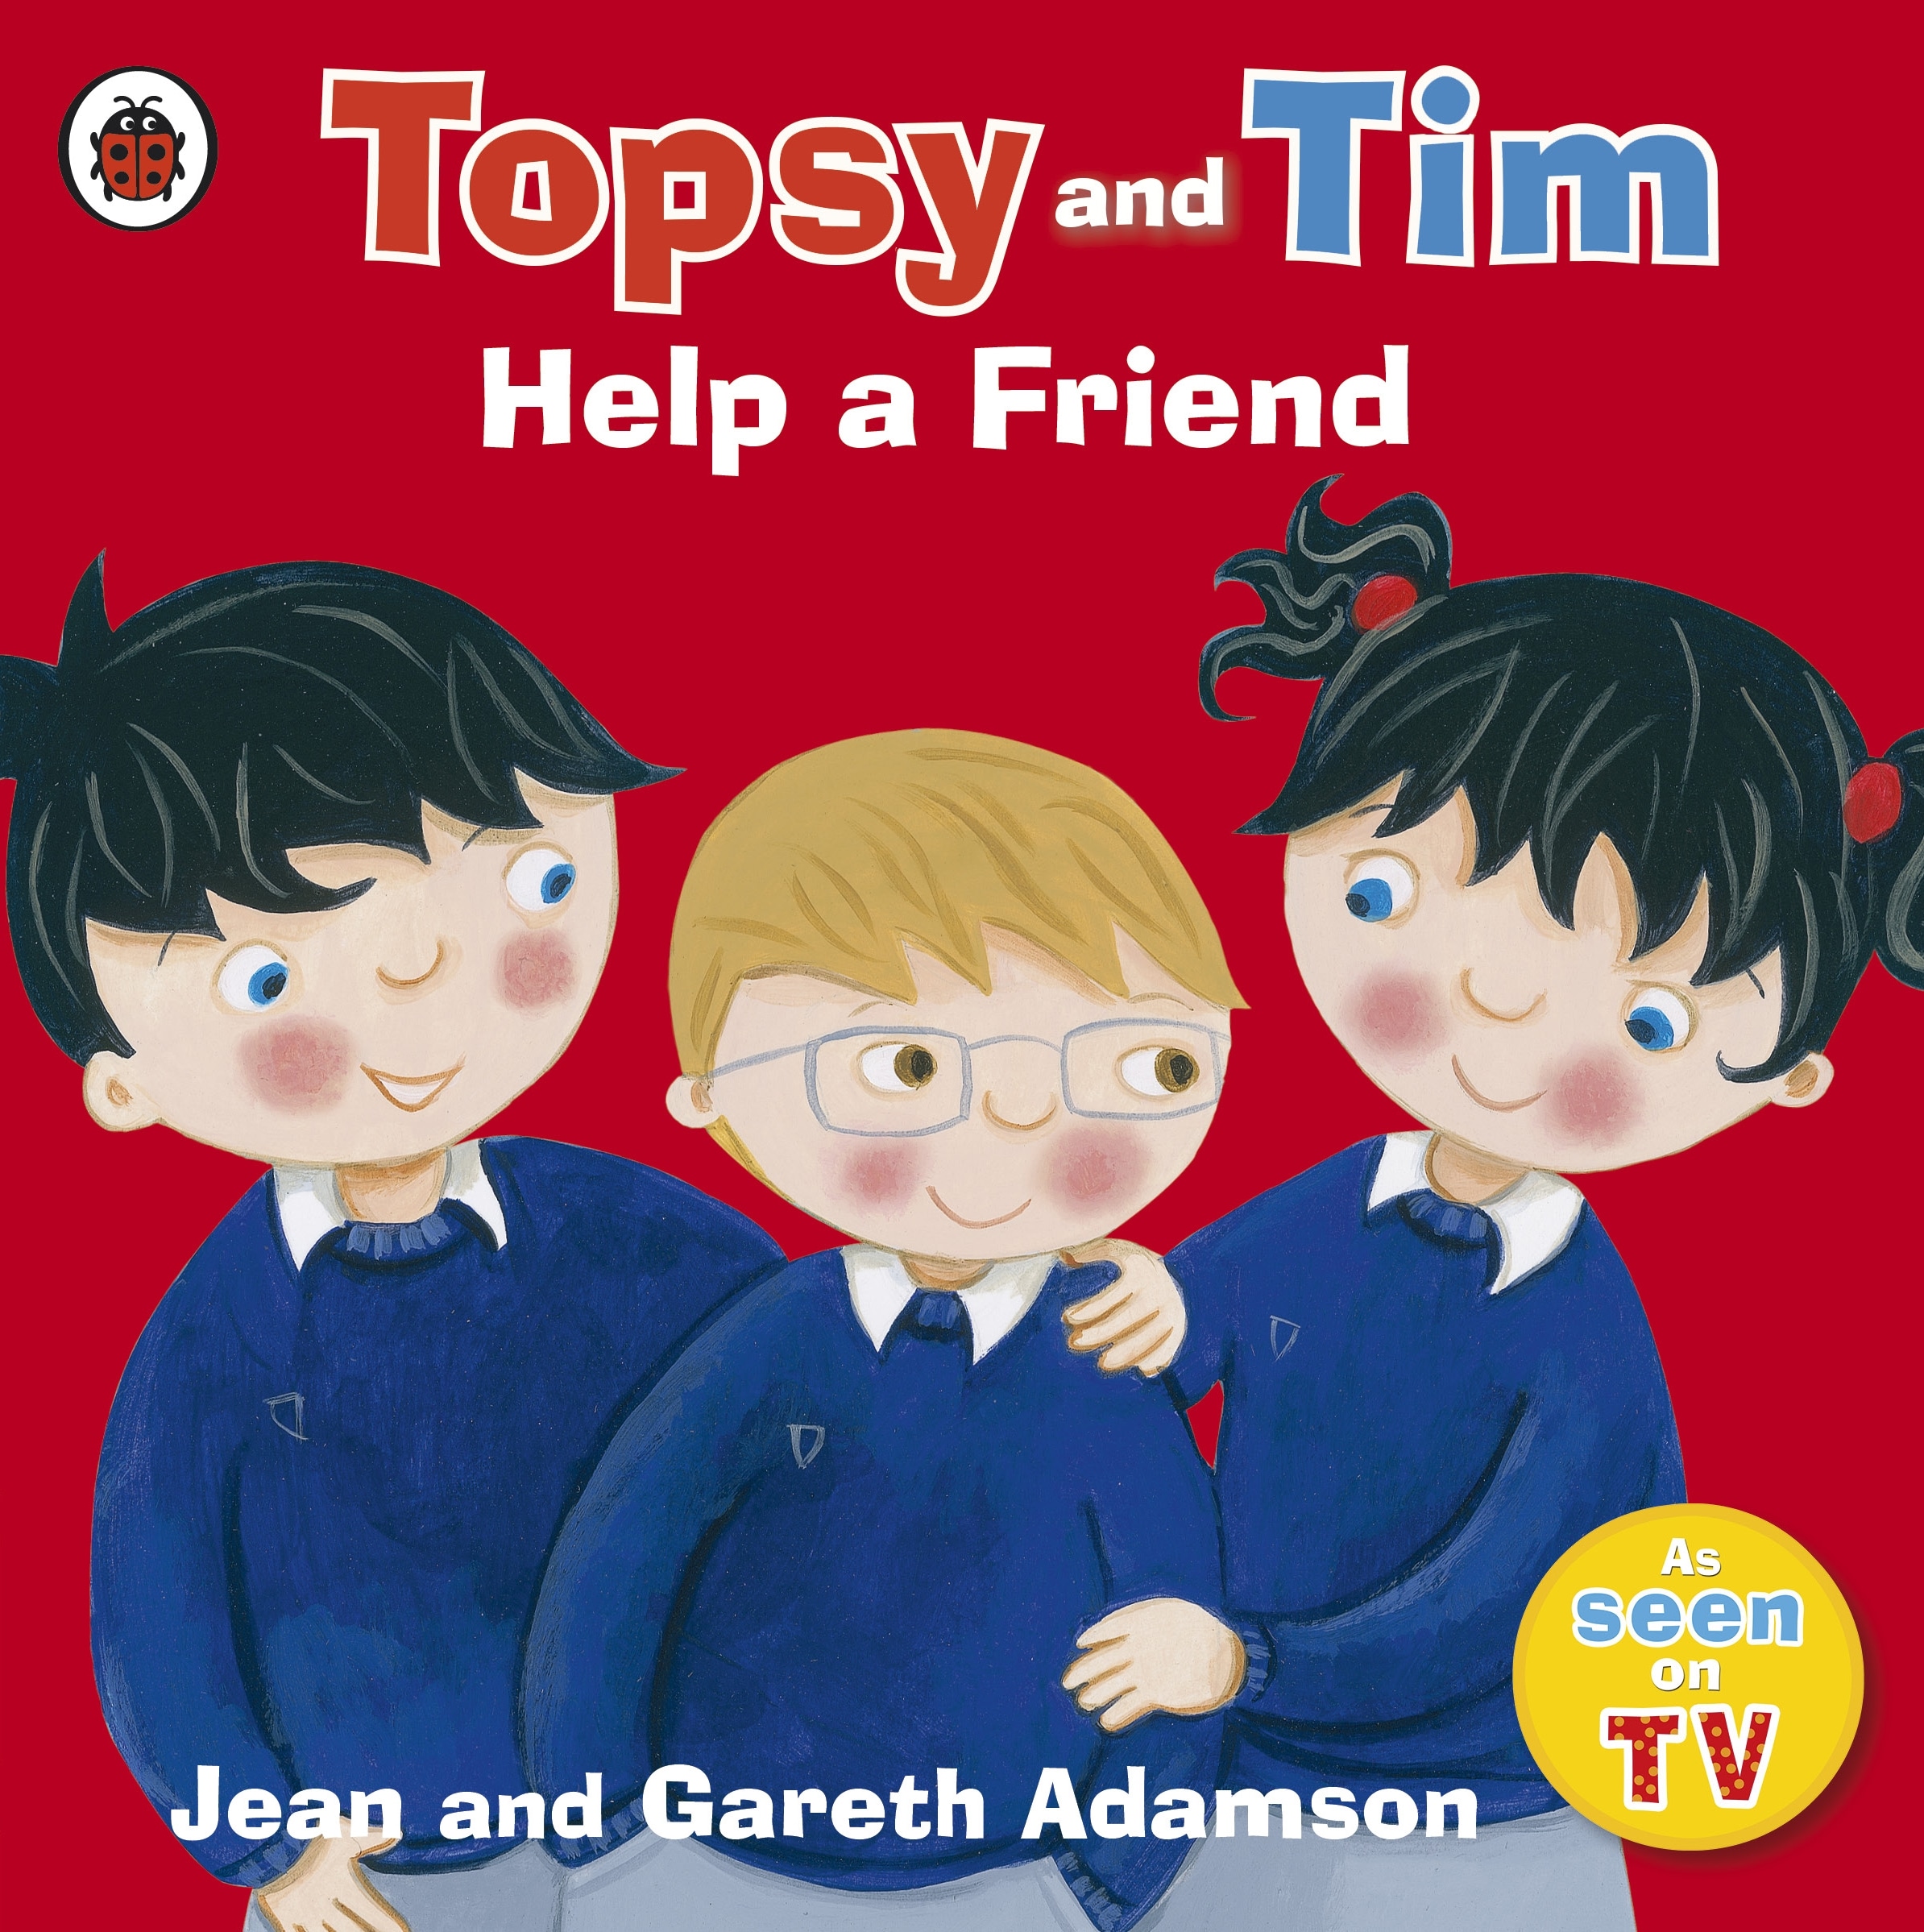 Book “Topsy and Tim: Help a Friend” by Jean Adamson, Gareth Adamson — January 1, 2015